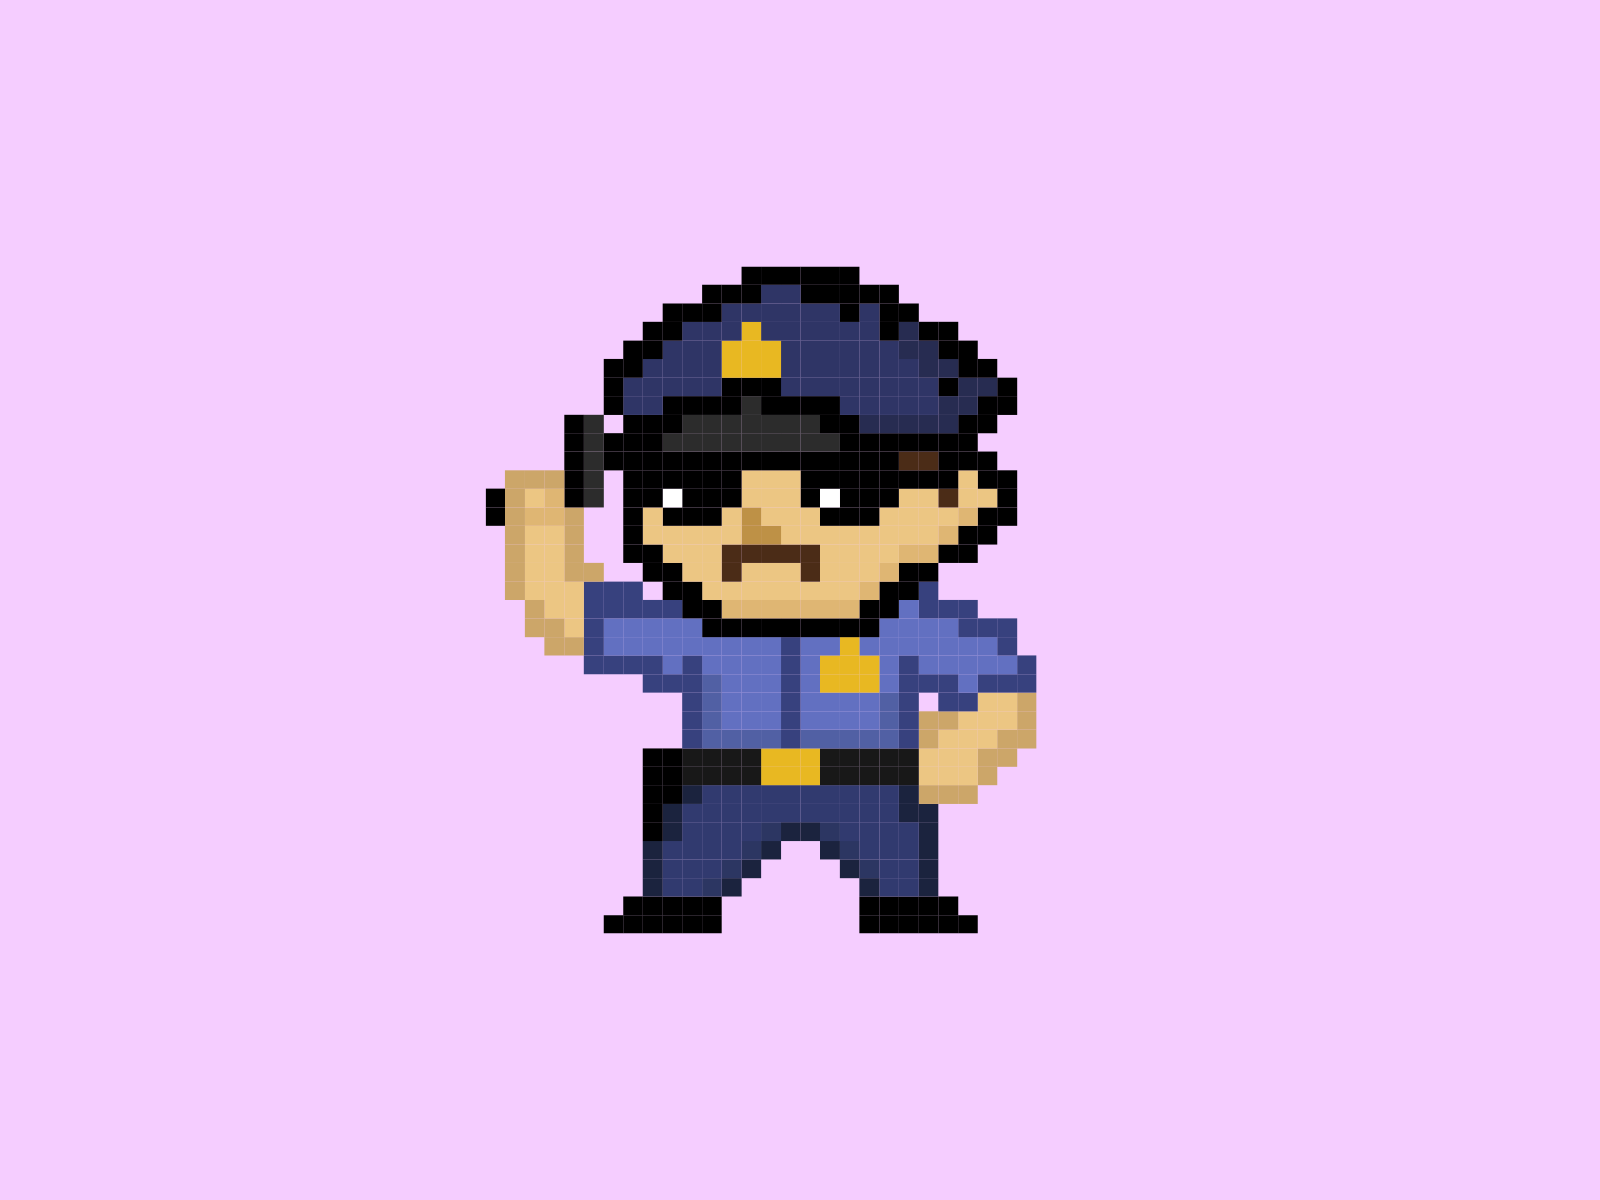 Pixel Art Police Officer by Tosca Digital on Dribbble